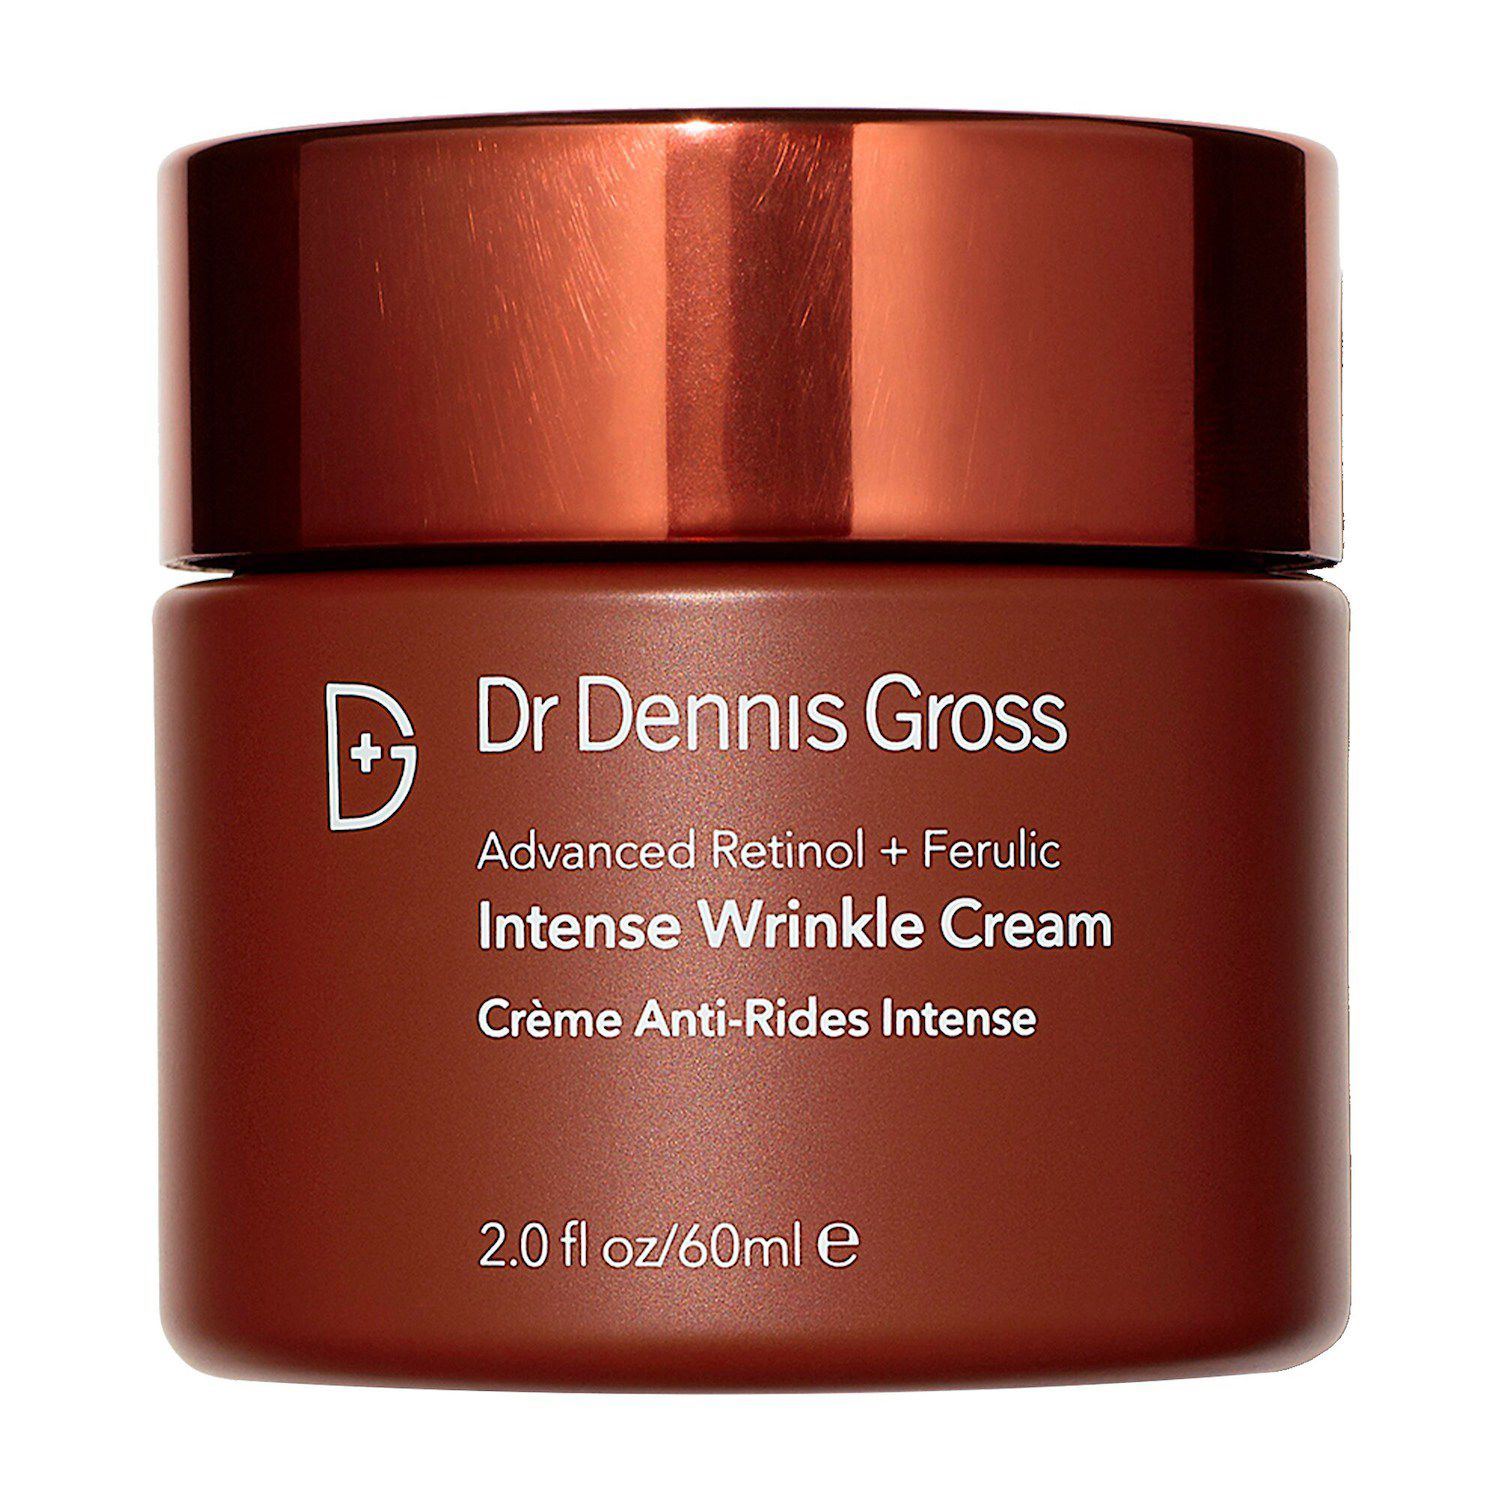 Image for Dr. Dennis Gross Skincare Advanced Retinol + Ferulic Intense Wrinkle Cream at Kohl's.